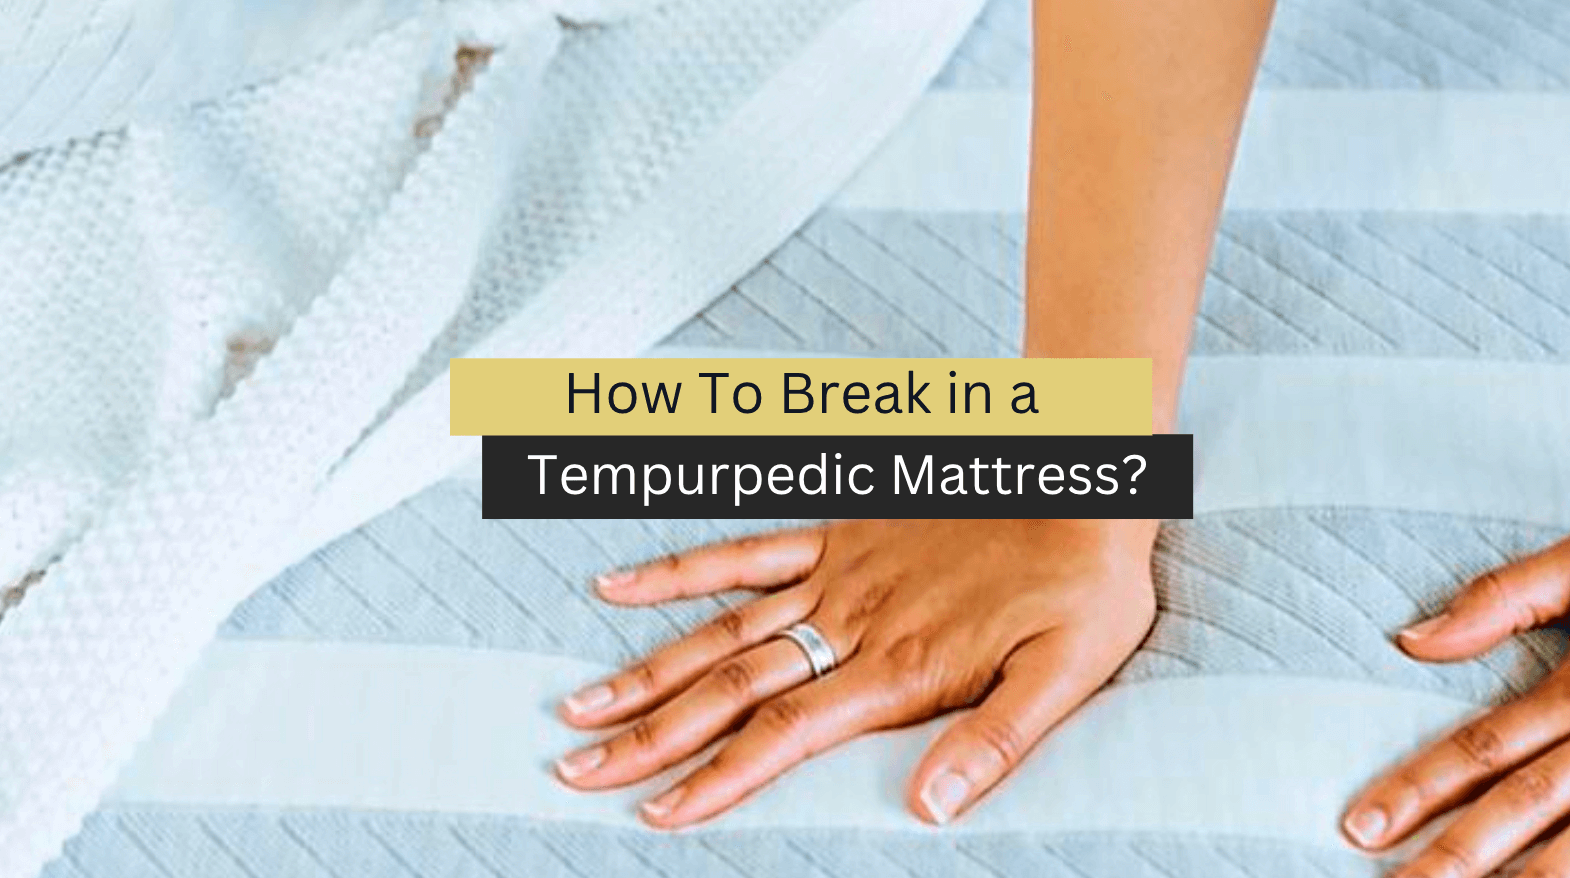 How To Break in a Tempurpedic Mattress? (A Step-By-Step Guide)